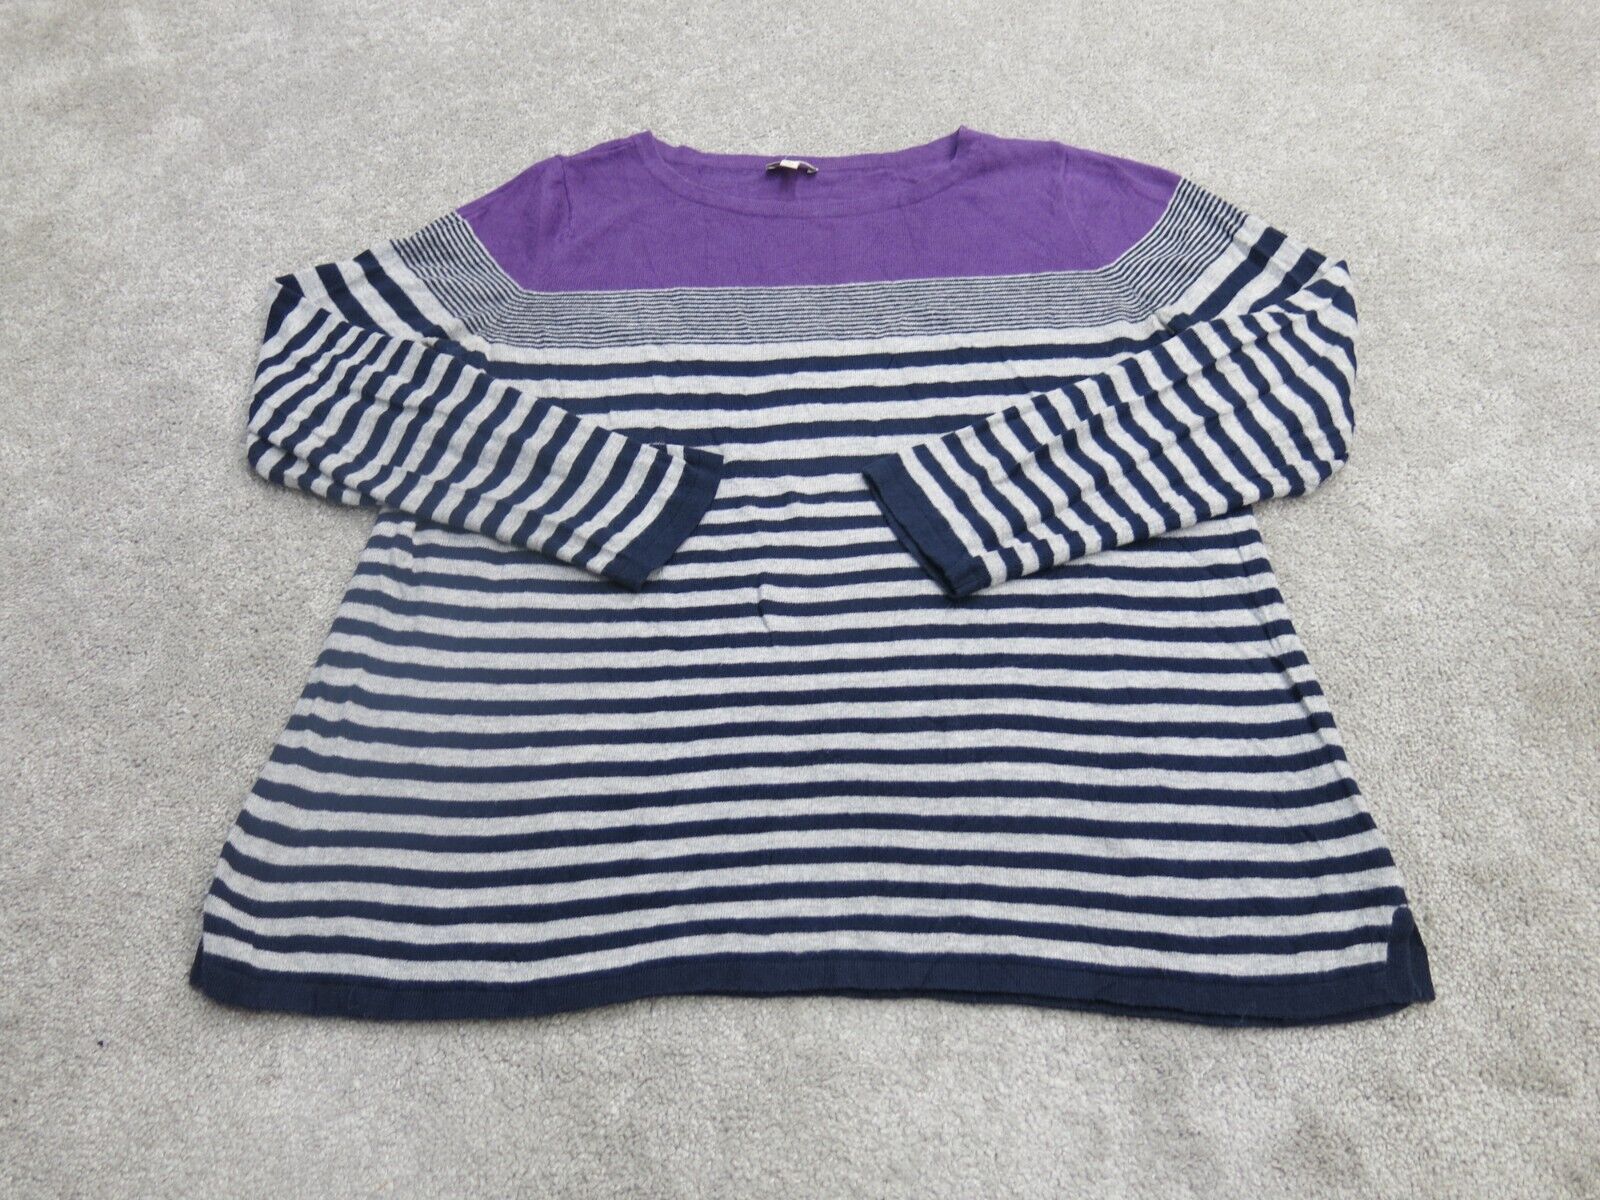 TALBOTS Lavender Lightweight Cardigan Sweater US Size Medium M -  Canada